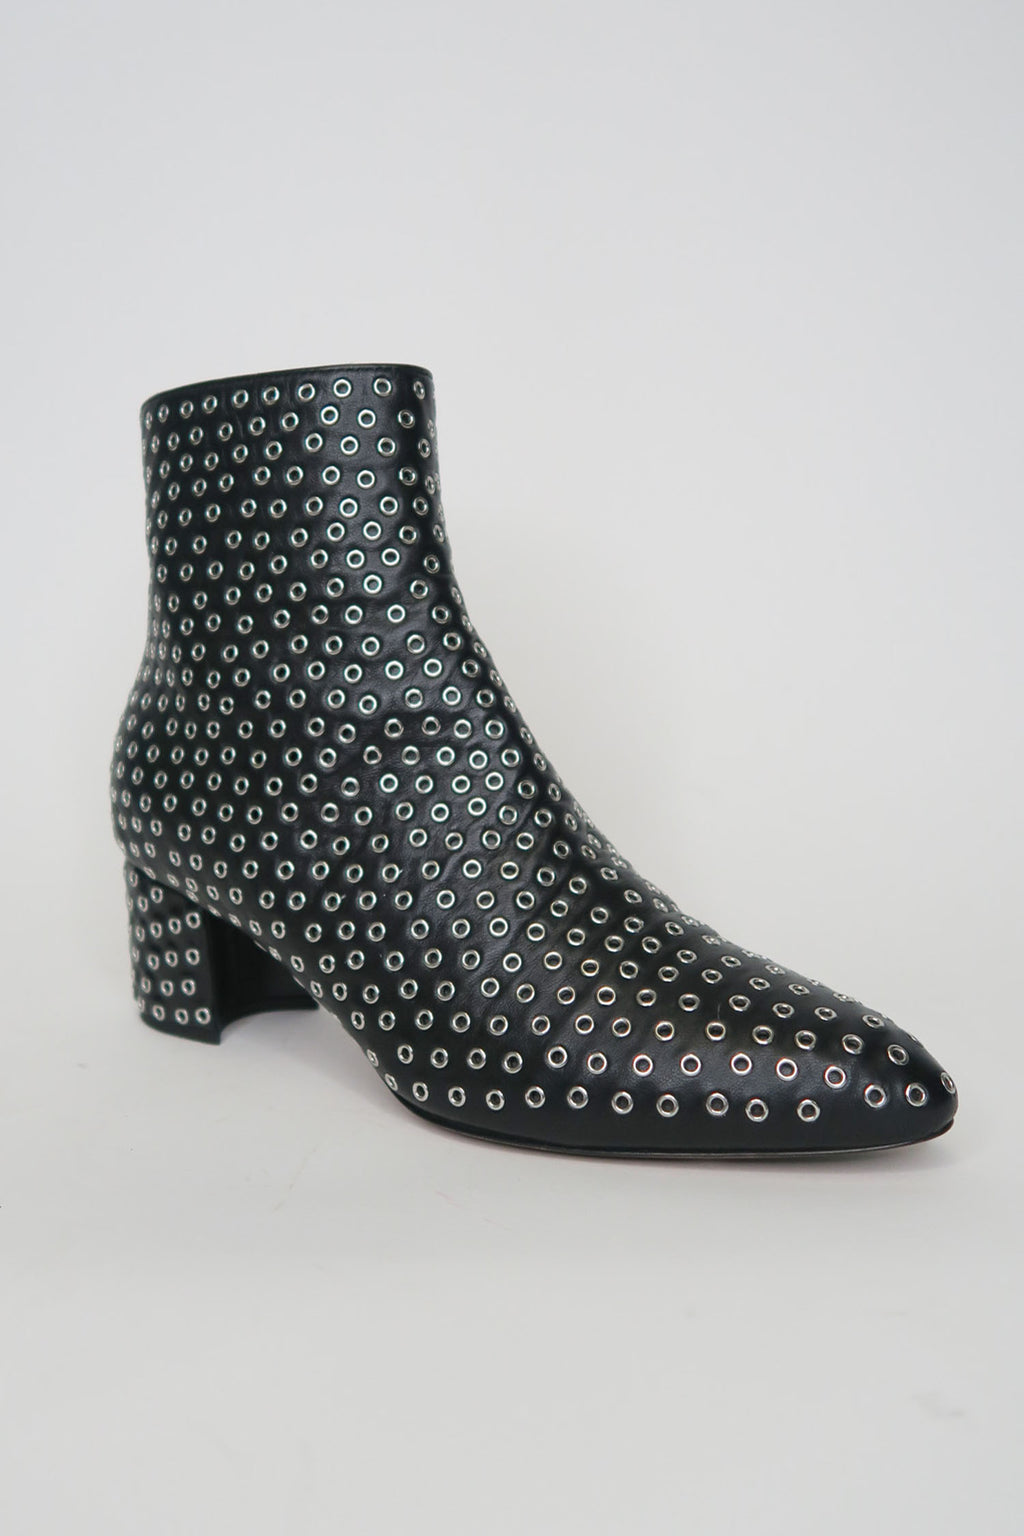 Alaïa Leather Studded Ankle Boots sz 37